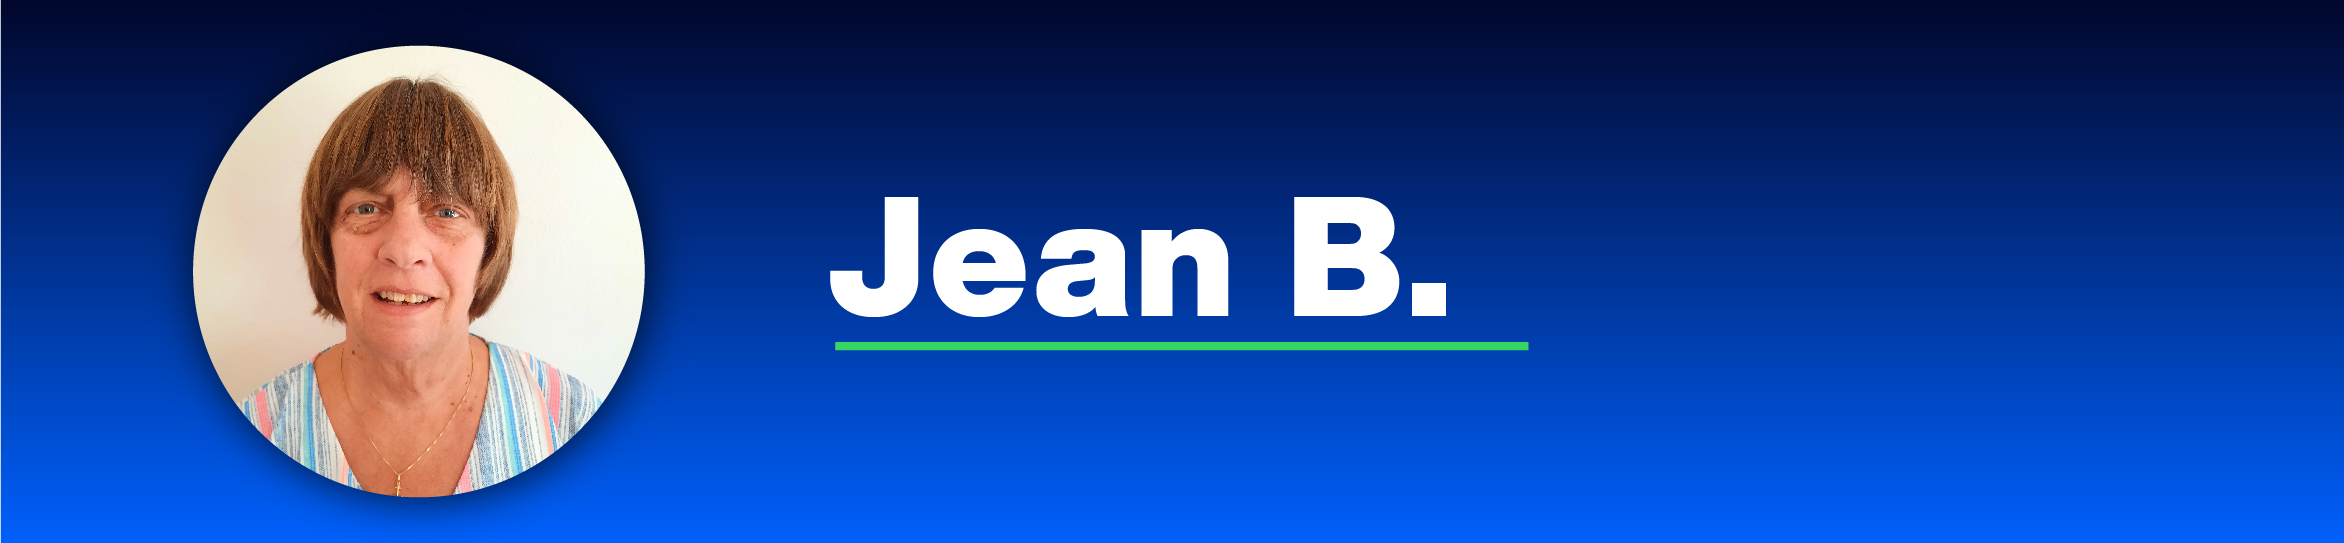 Jean_B_Member_Story-01.jpg